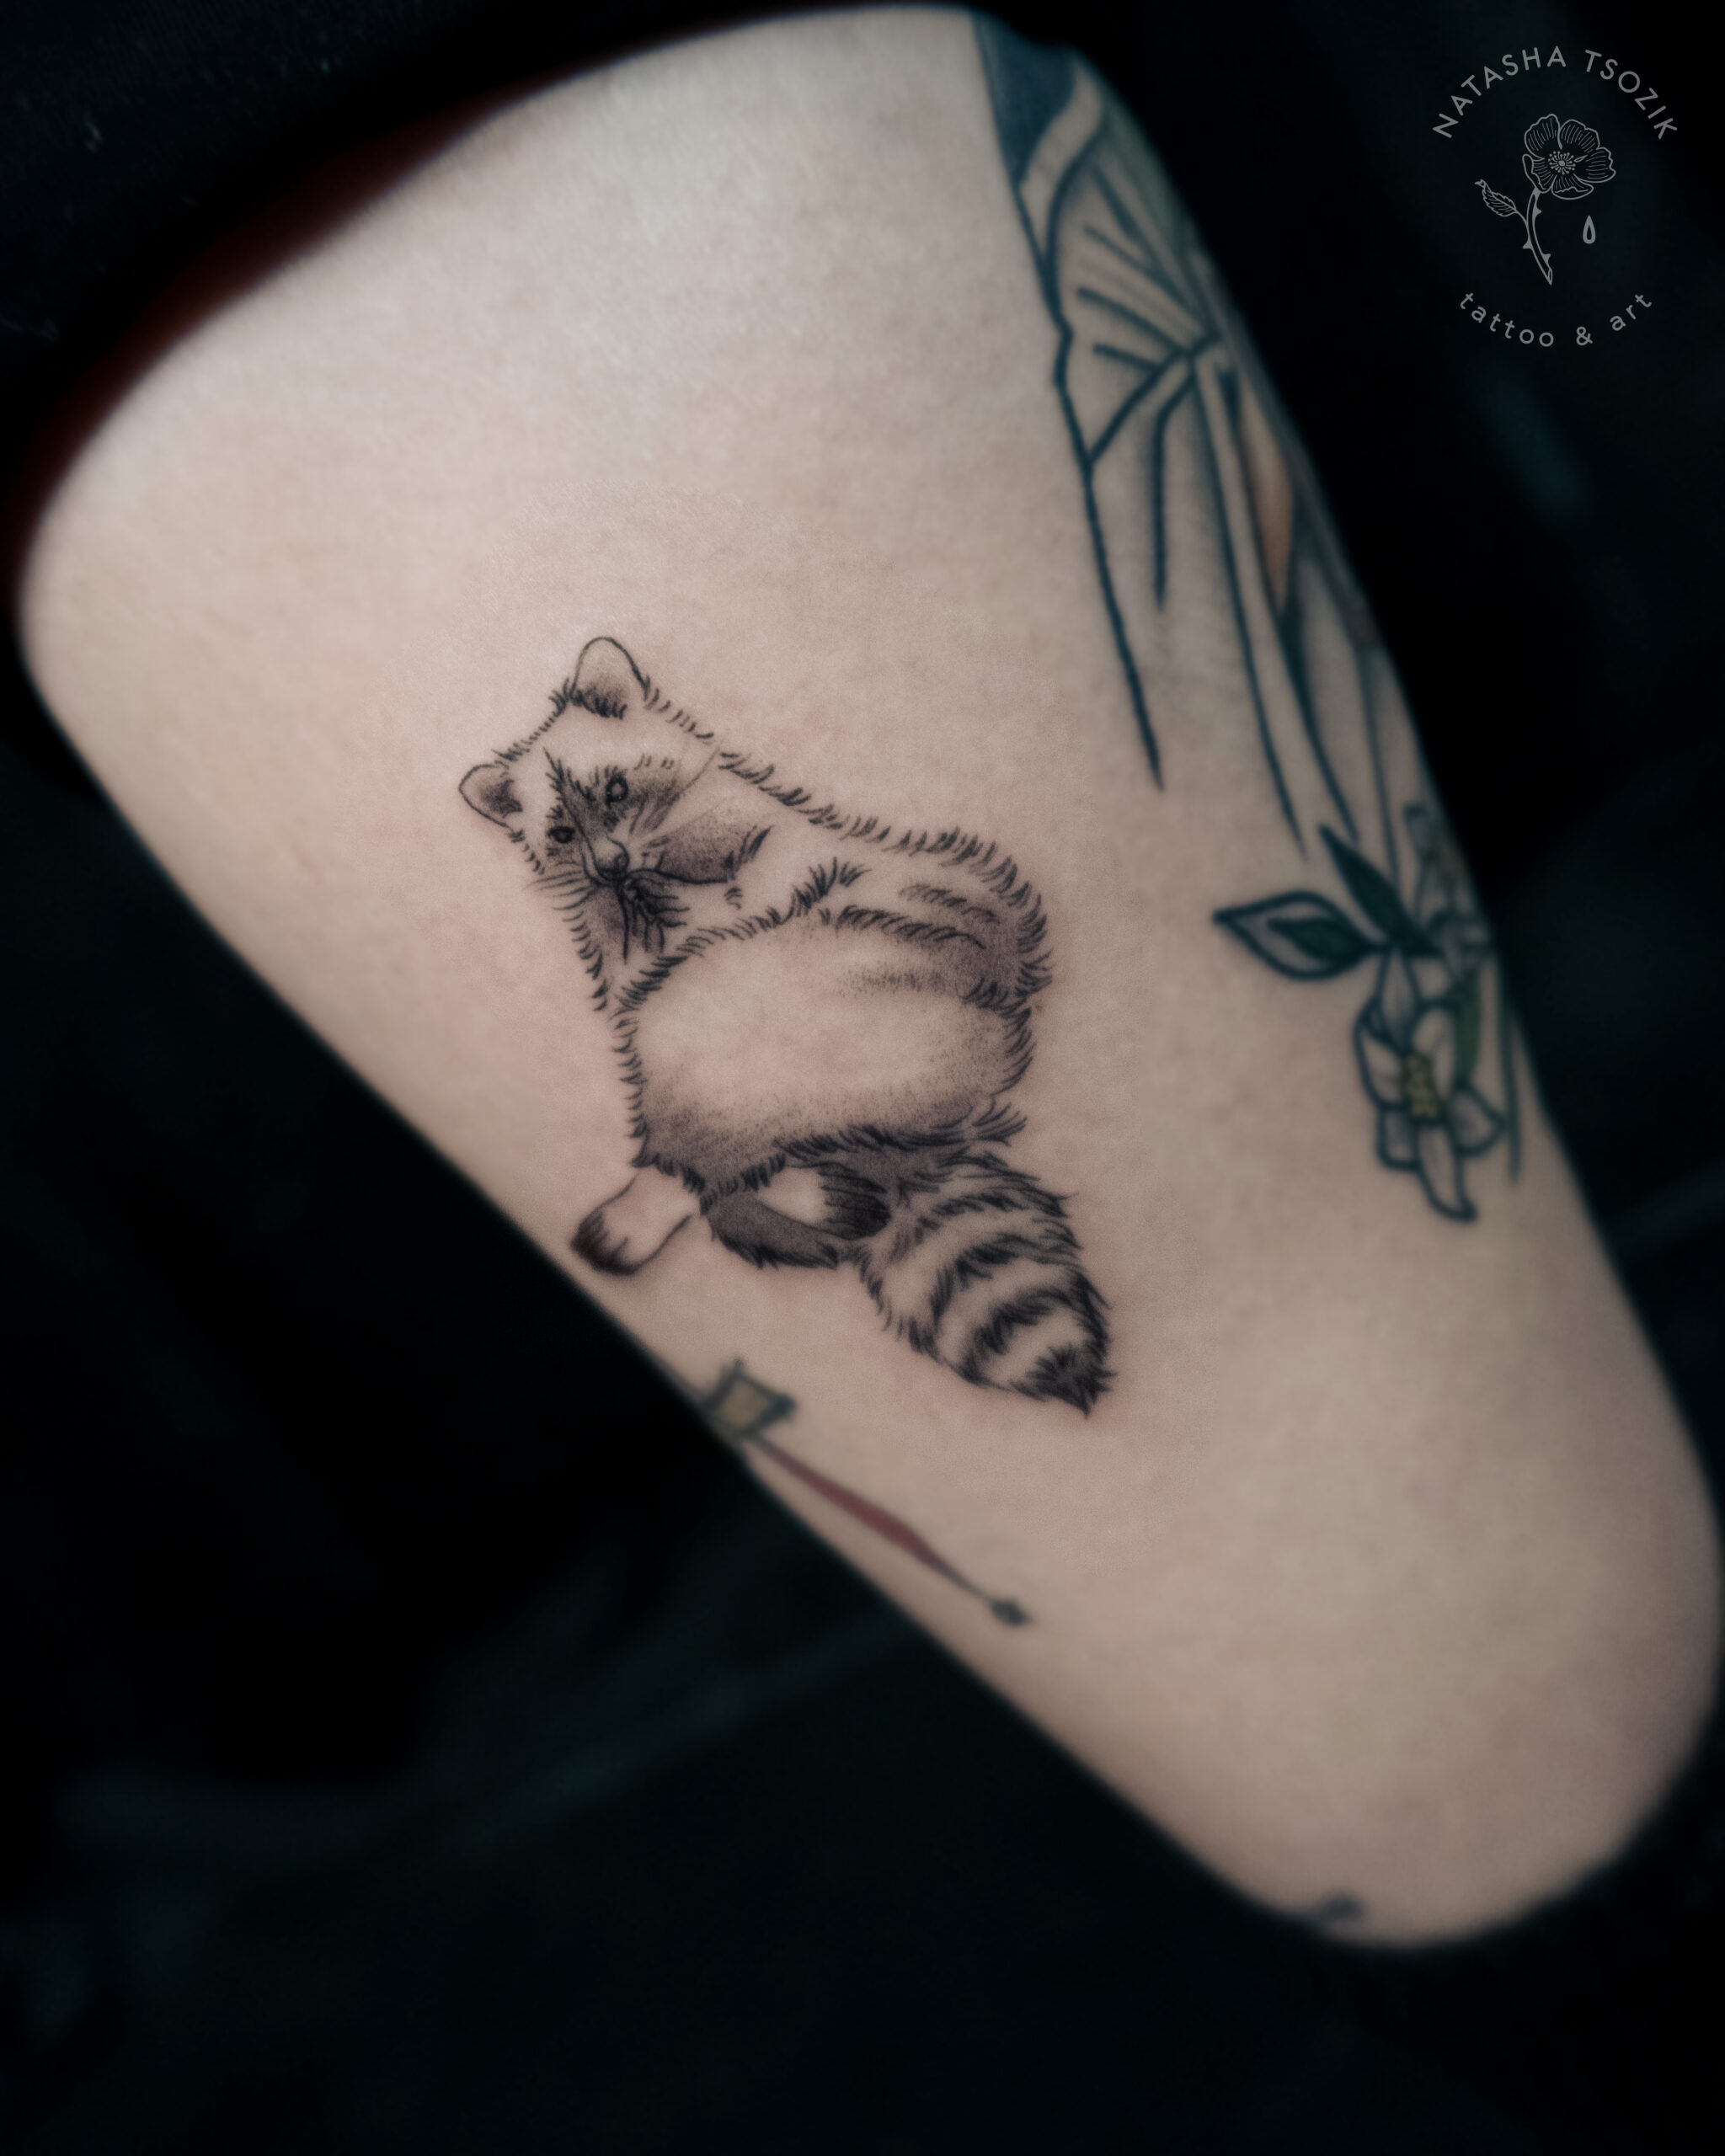 A fine line raccoon tattoo on a leg.